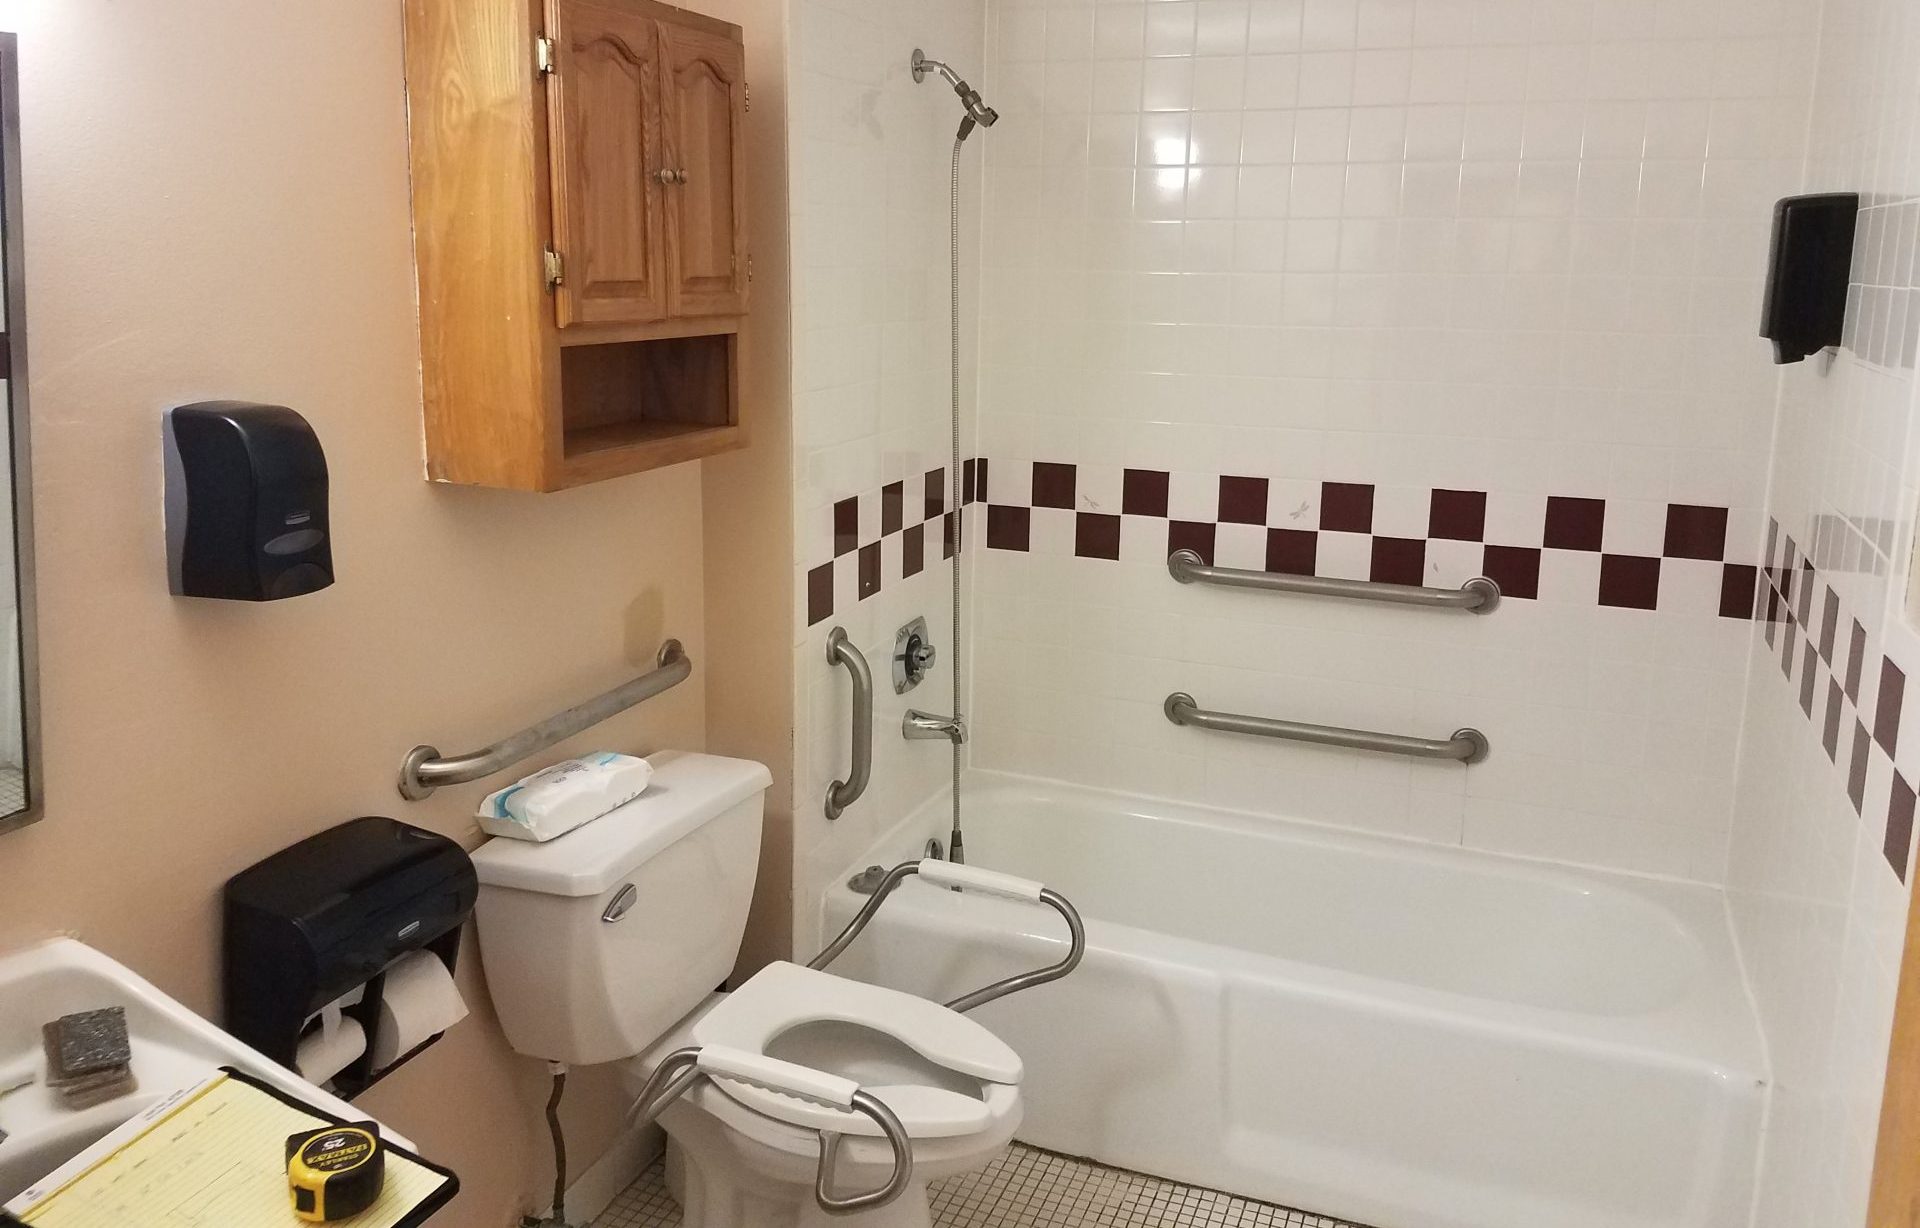 Aspire of WNY Bathroom Repair 1